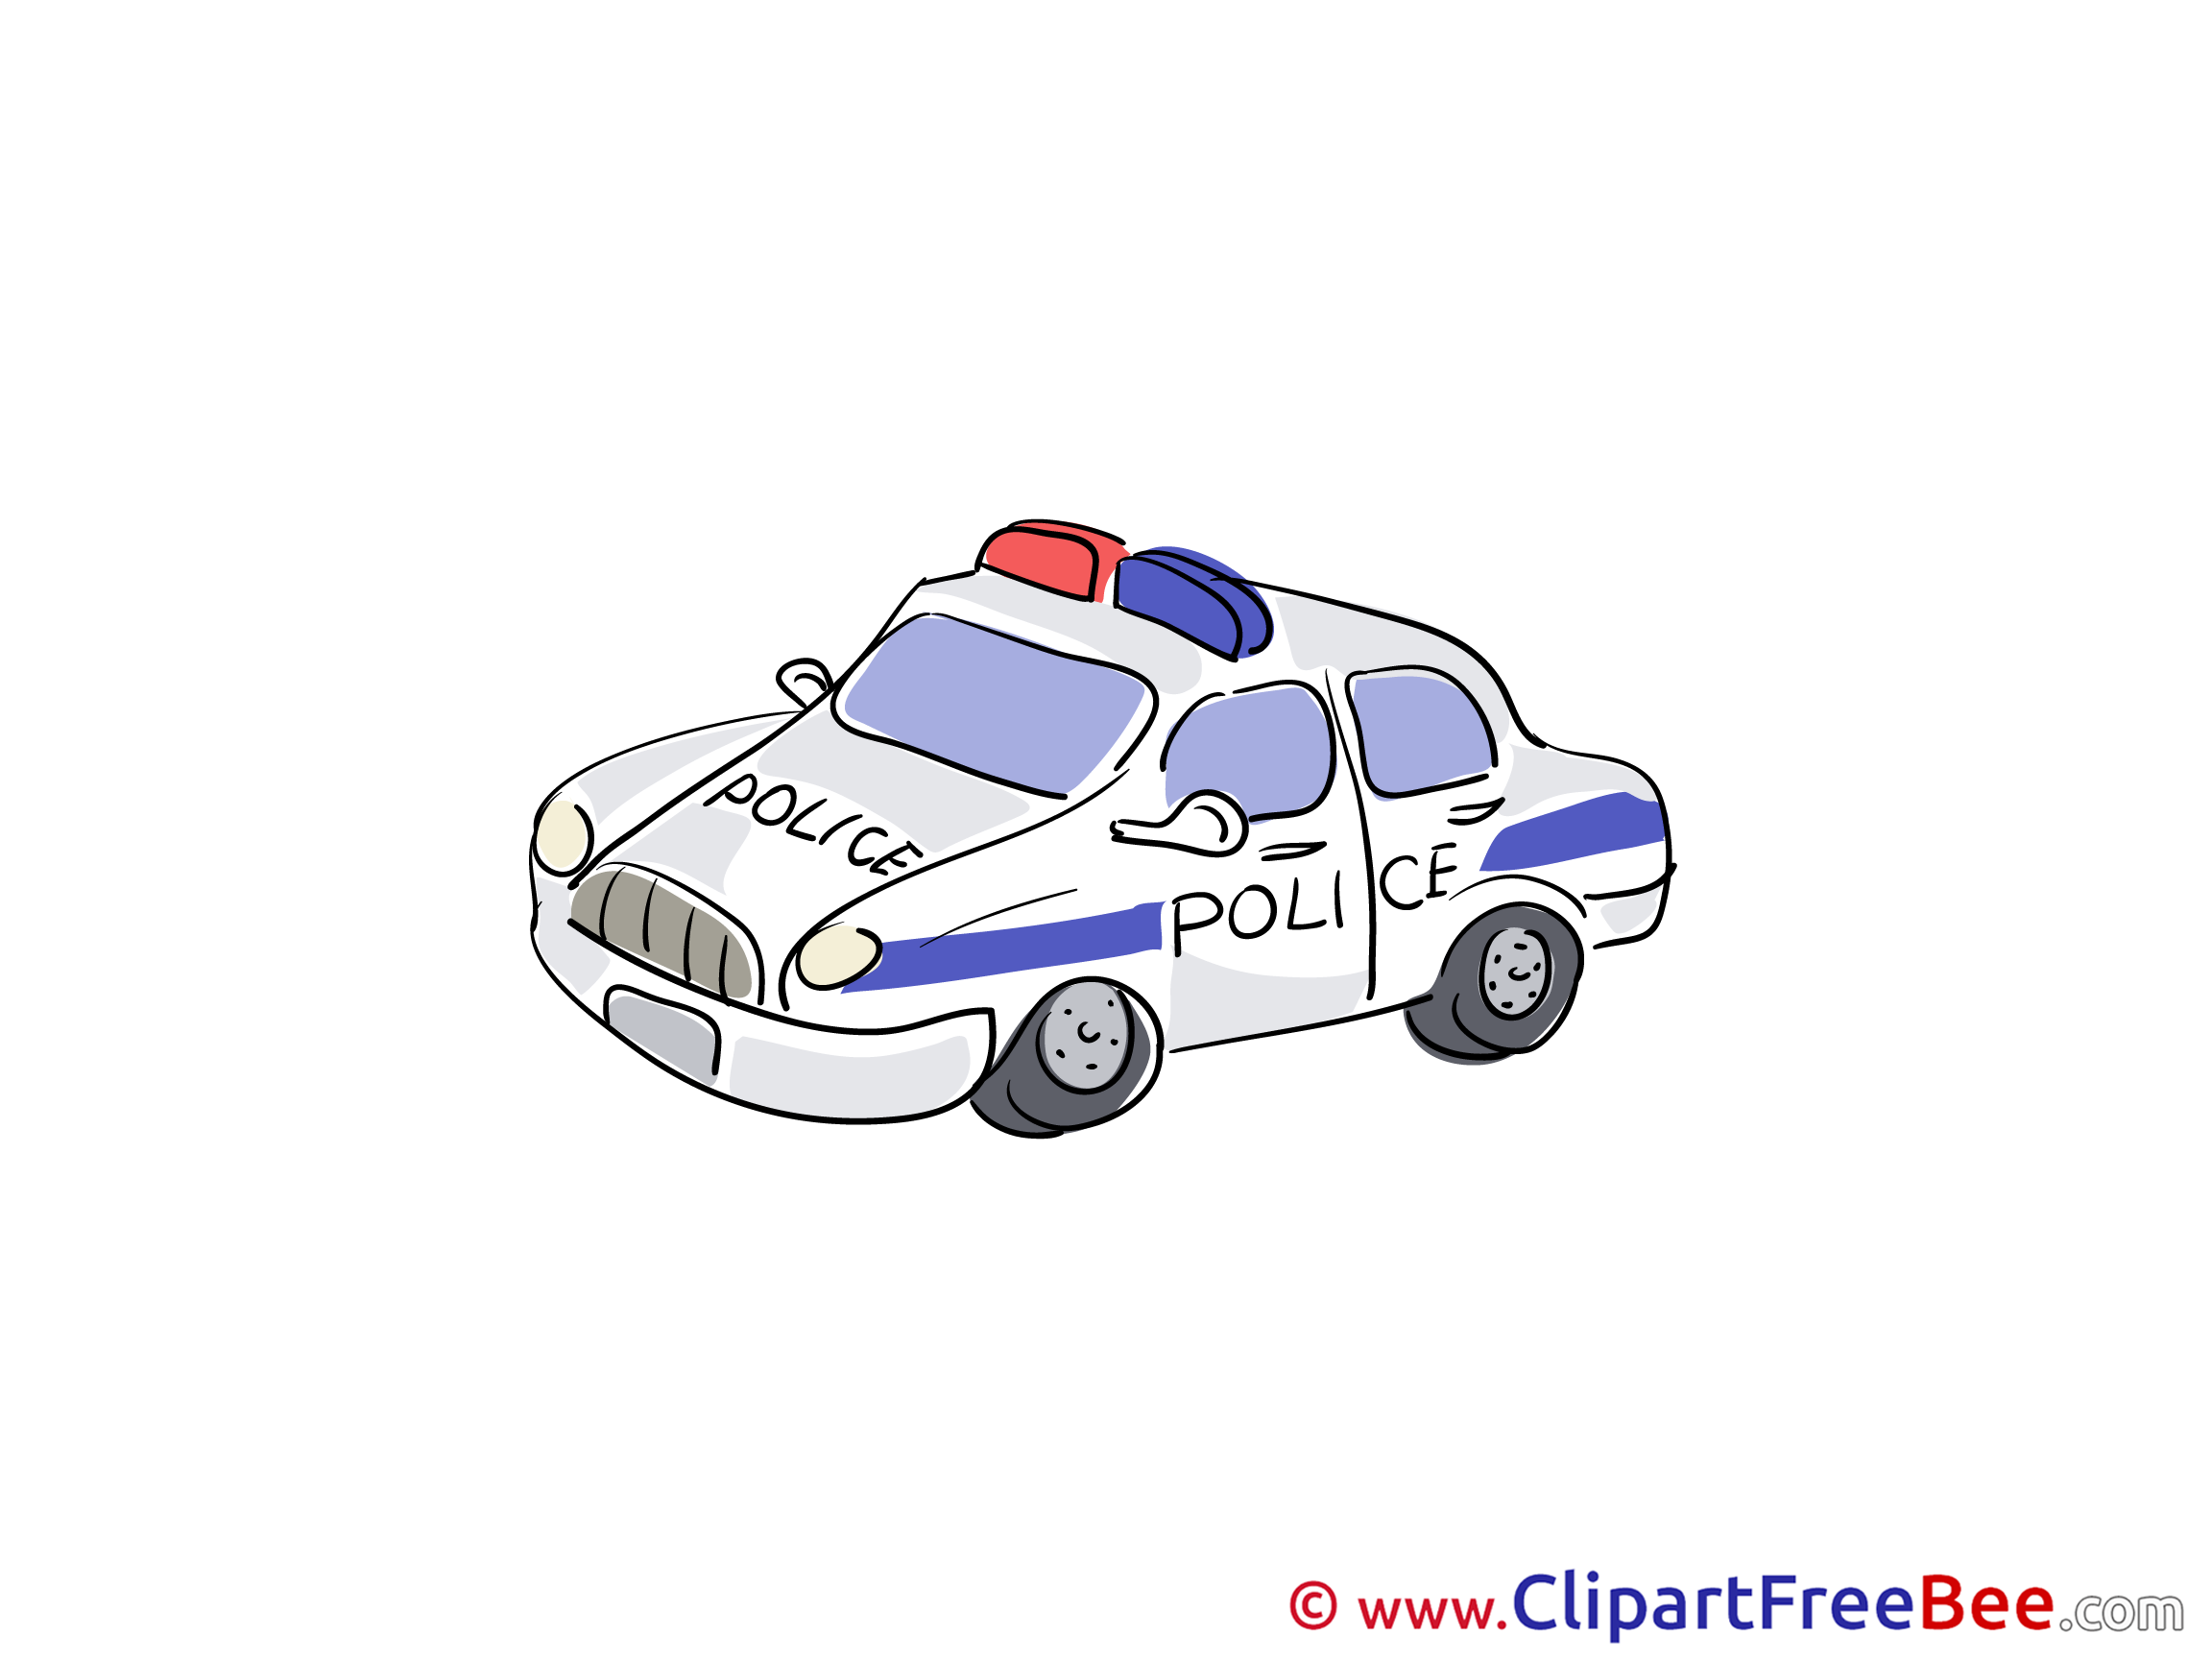 Police Car free Illustration download